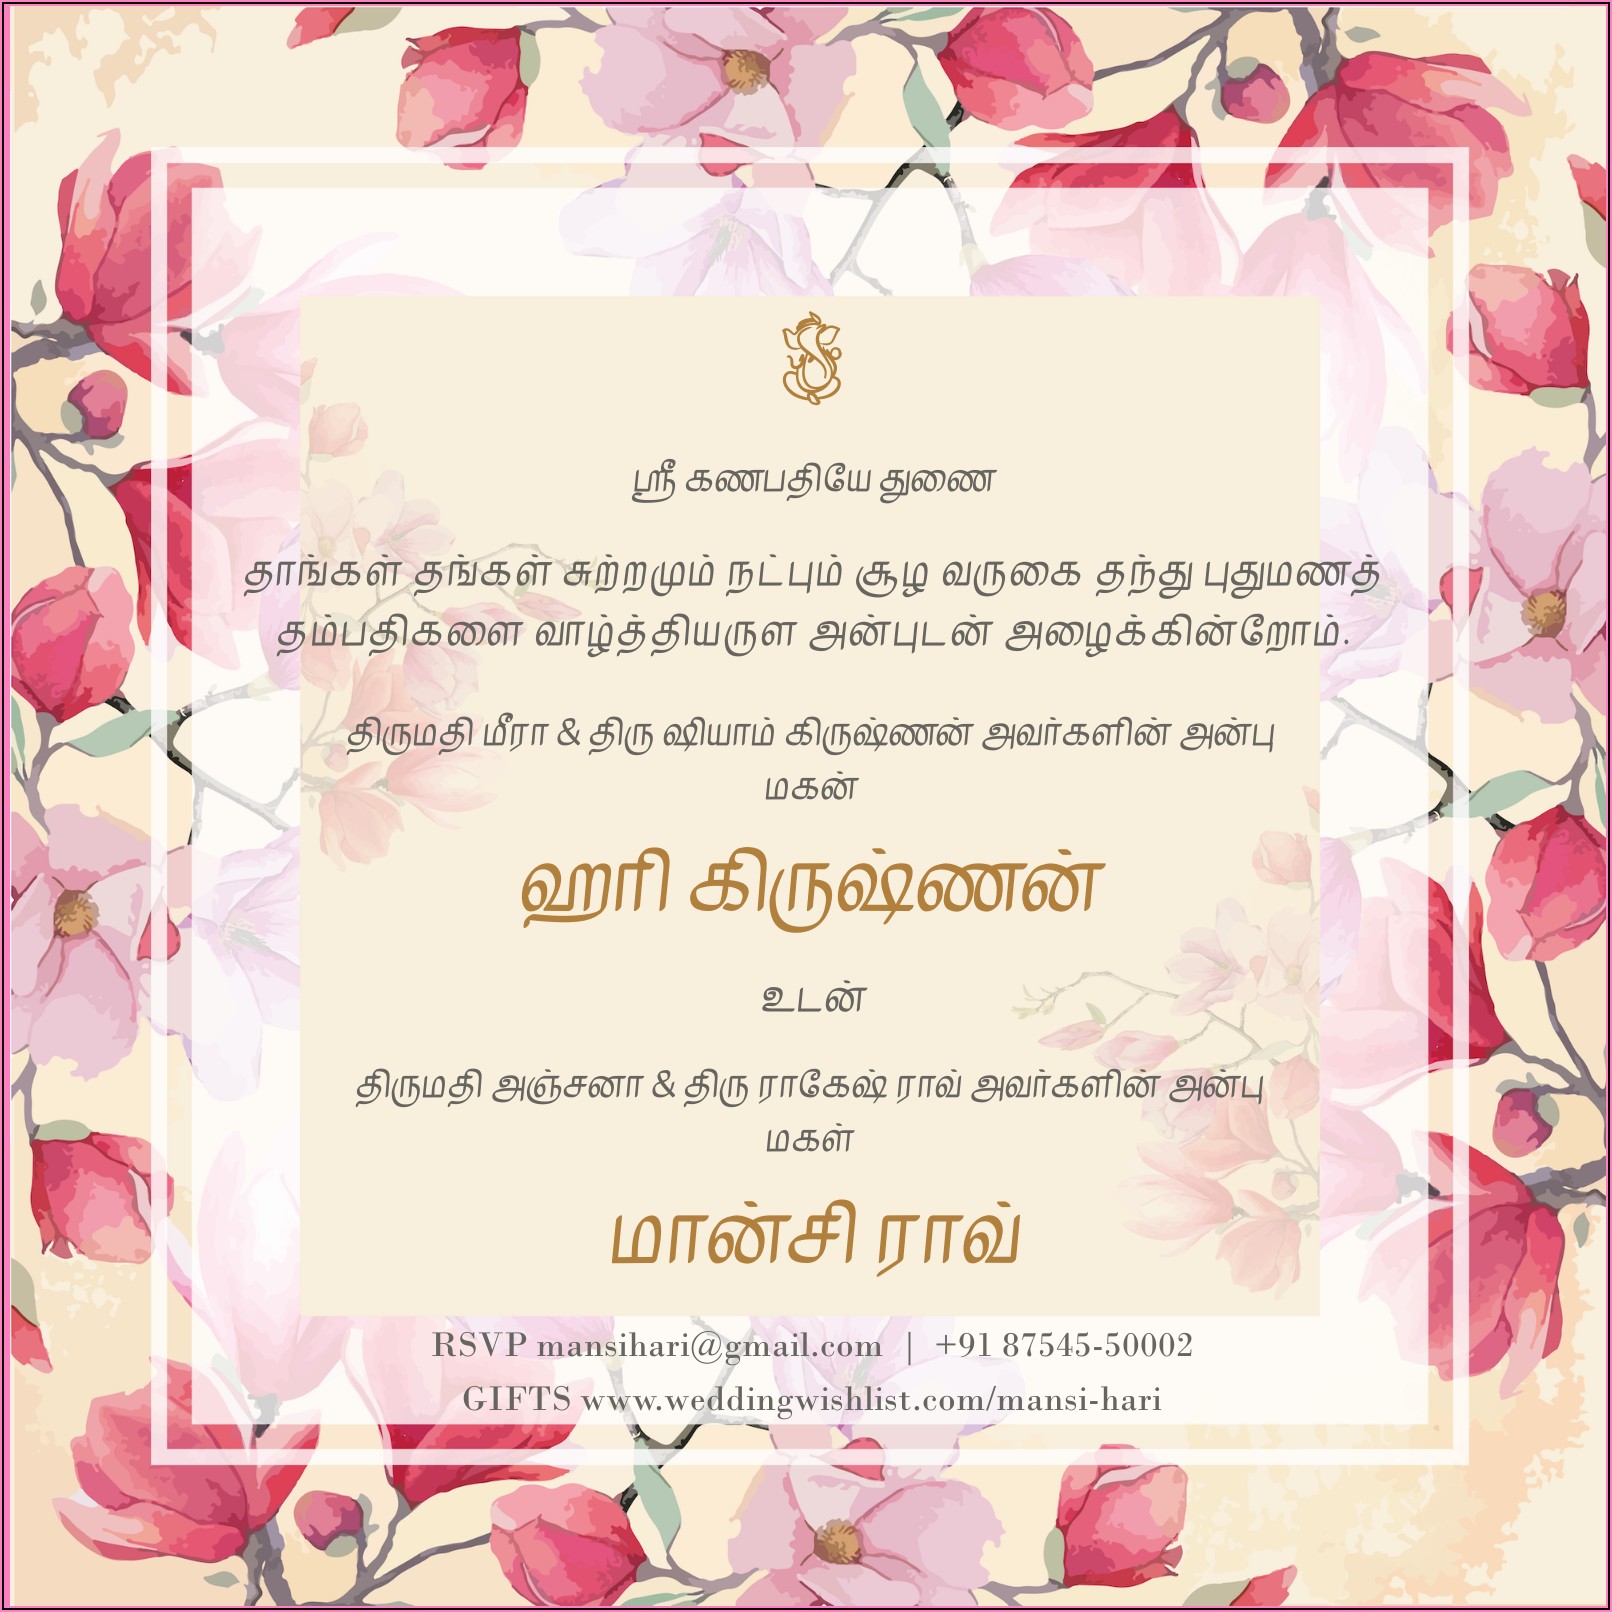 Marriage Invitation Quotes To Invite Friends In Tamil